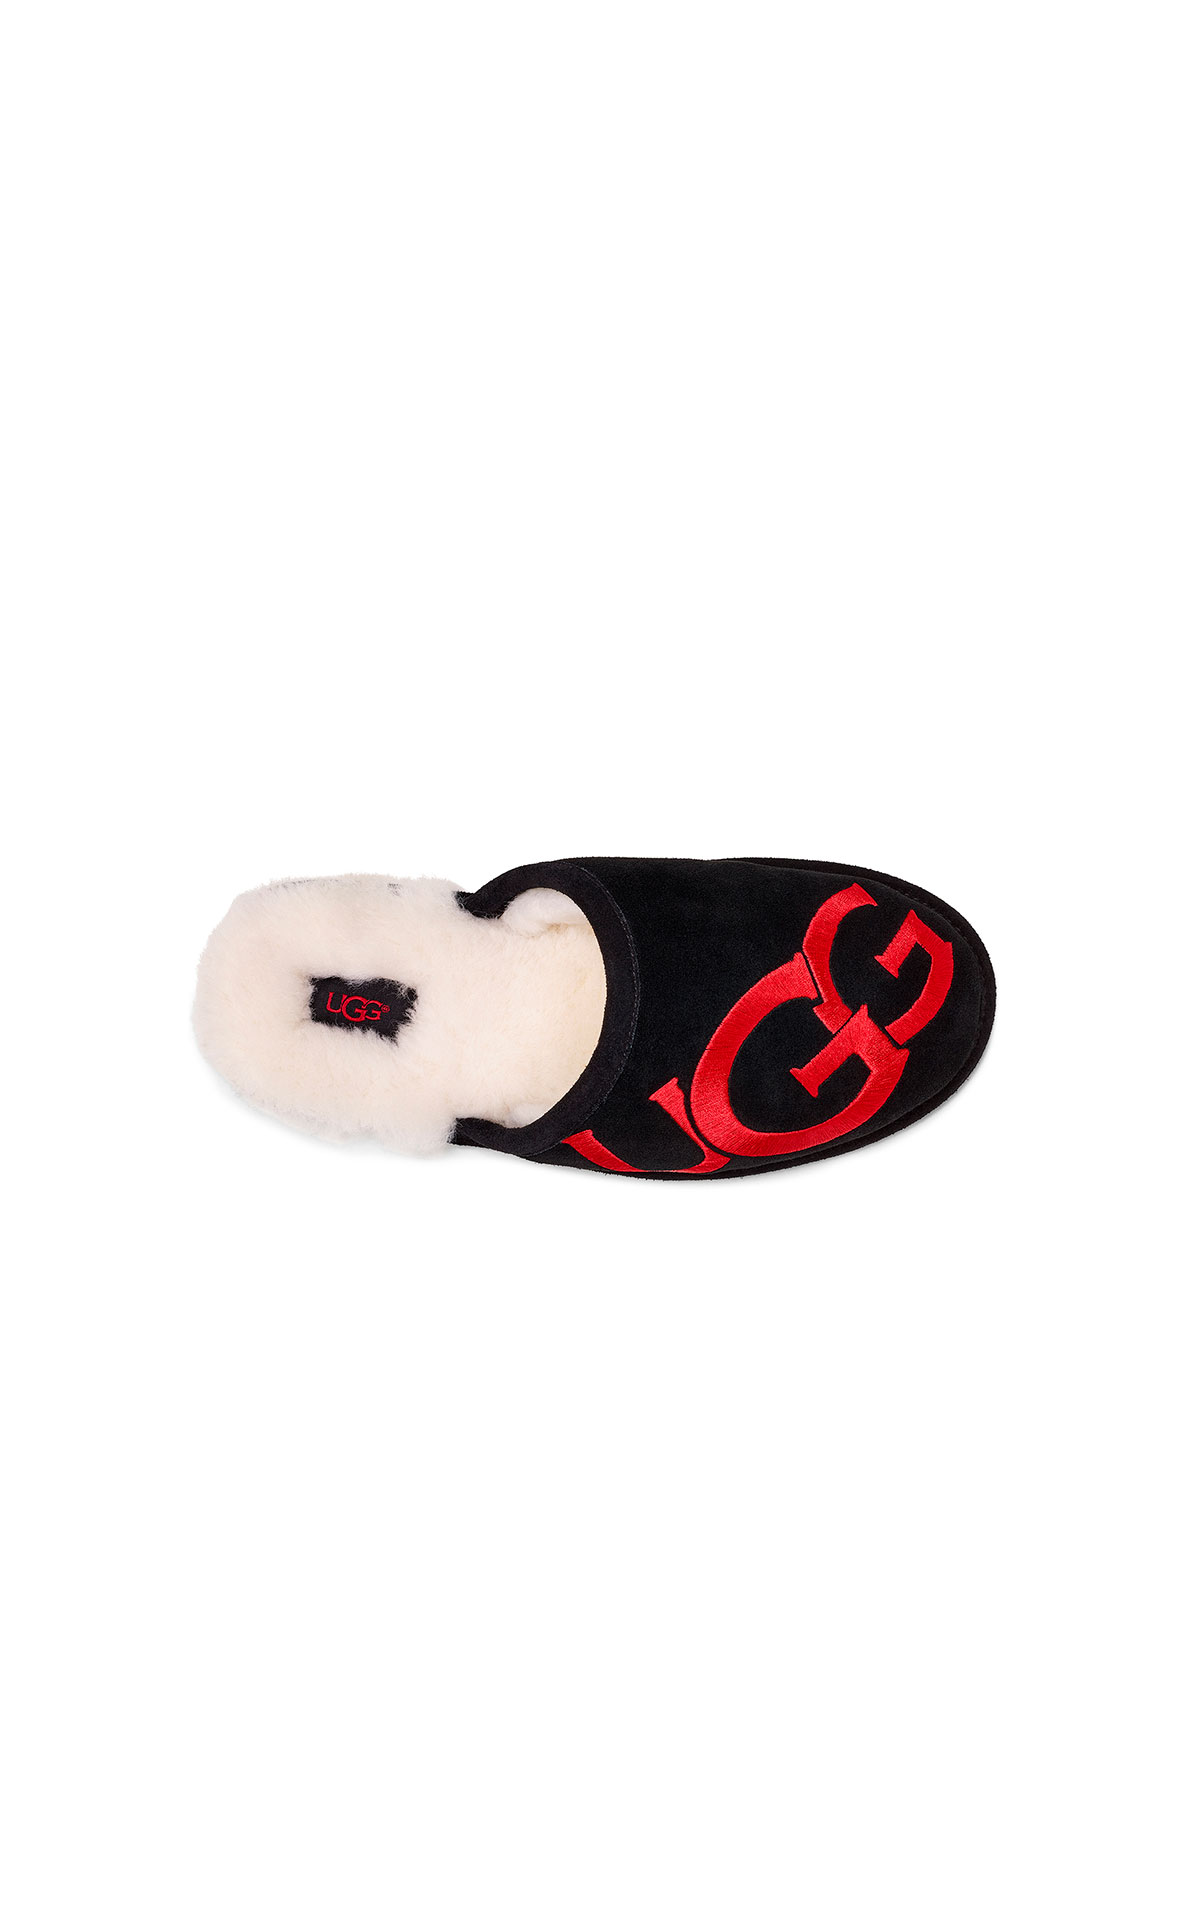 Zapatillas negras con logo rojo UGG